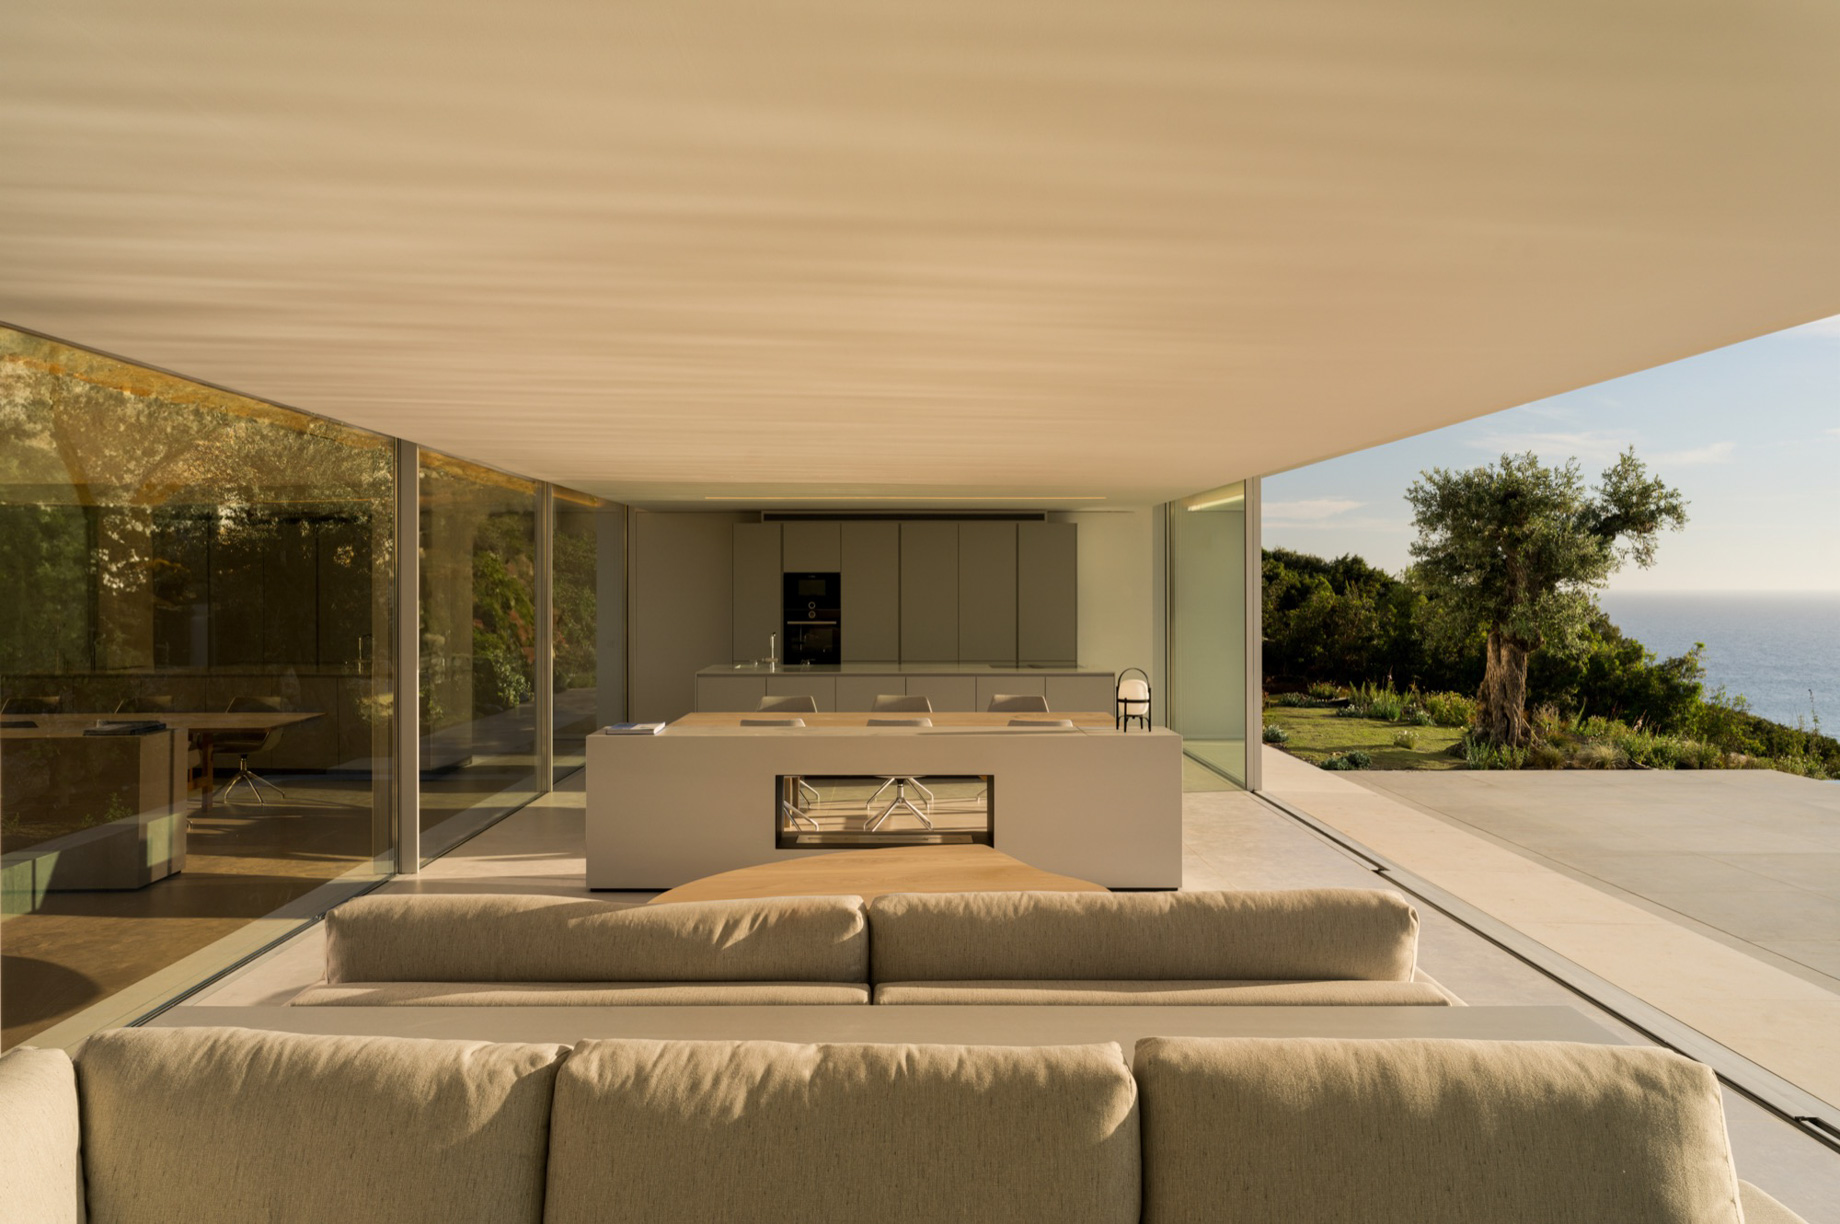 House on the Air Modern Contemporary Villa – Zahara de los Atunes, Spain – 35